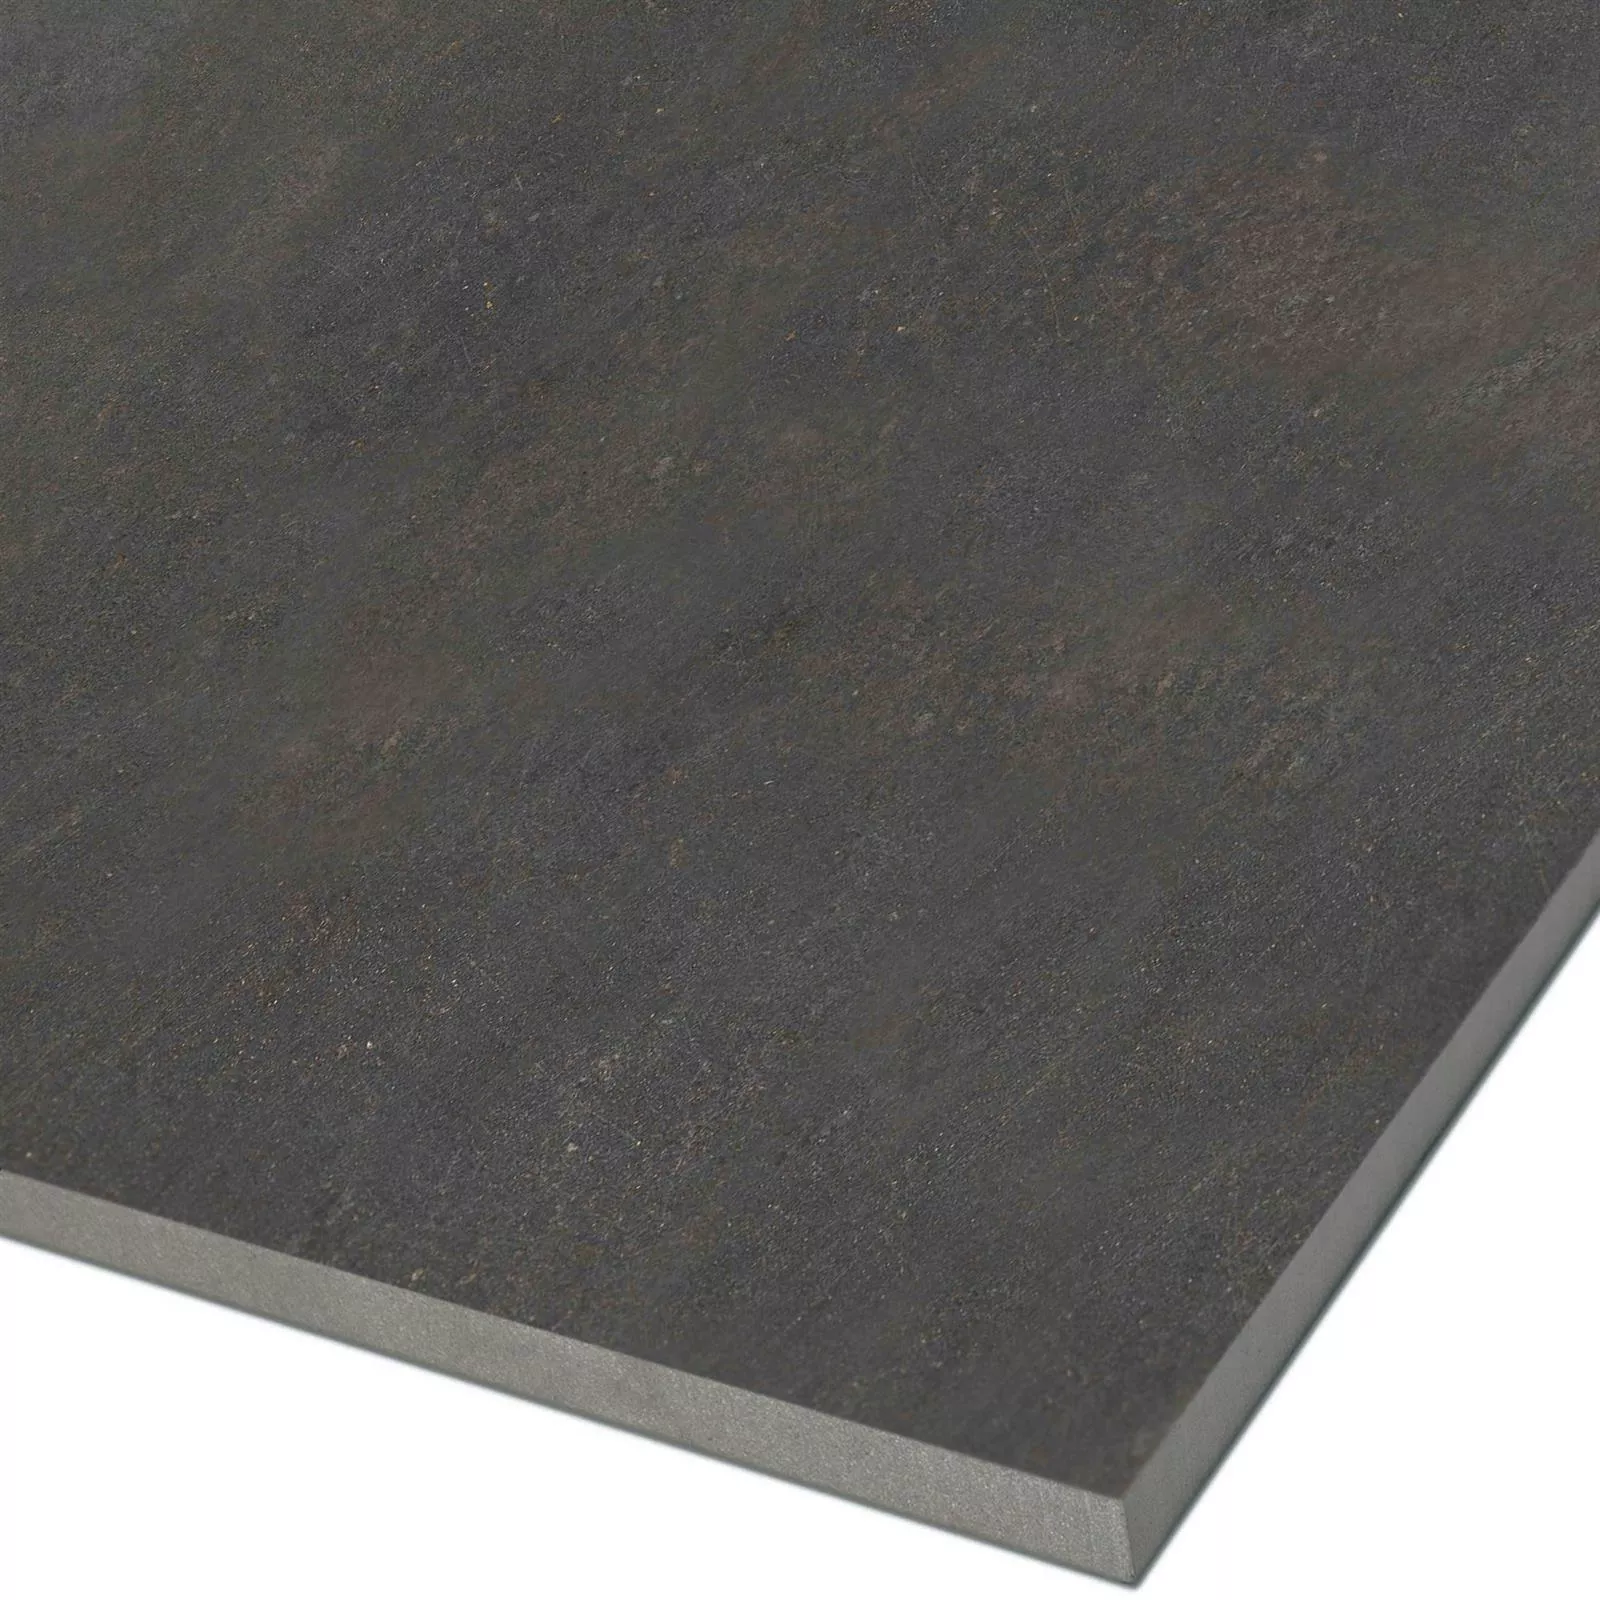 Sample Floor Tiles Peaceway Anthracite 60x60cm